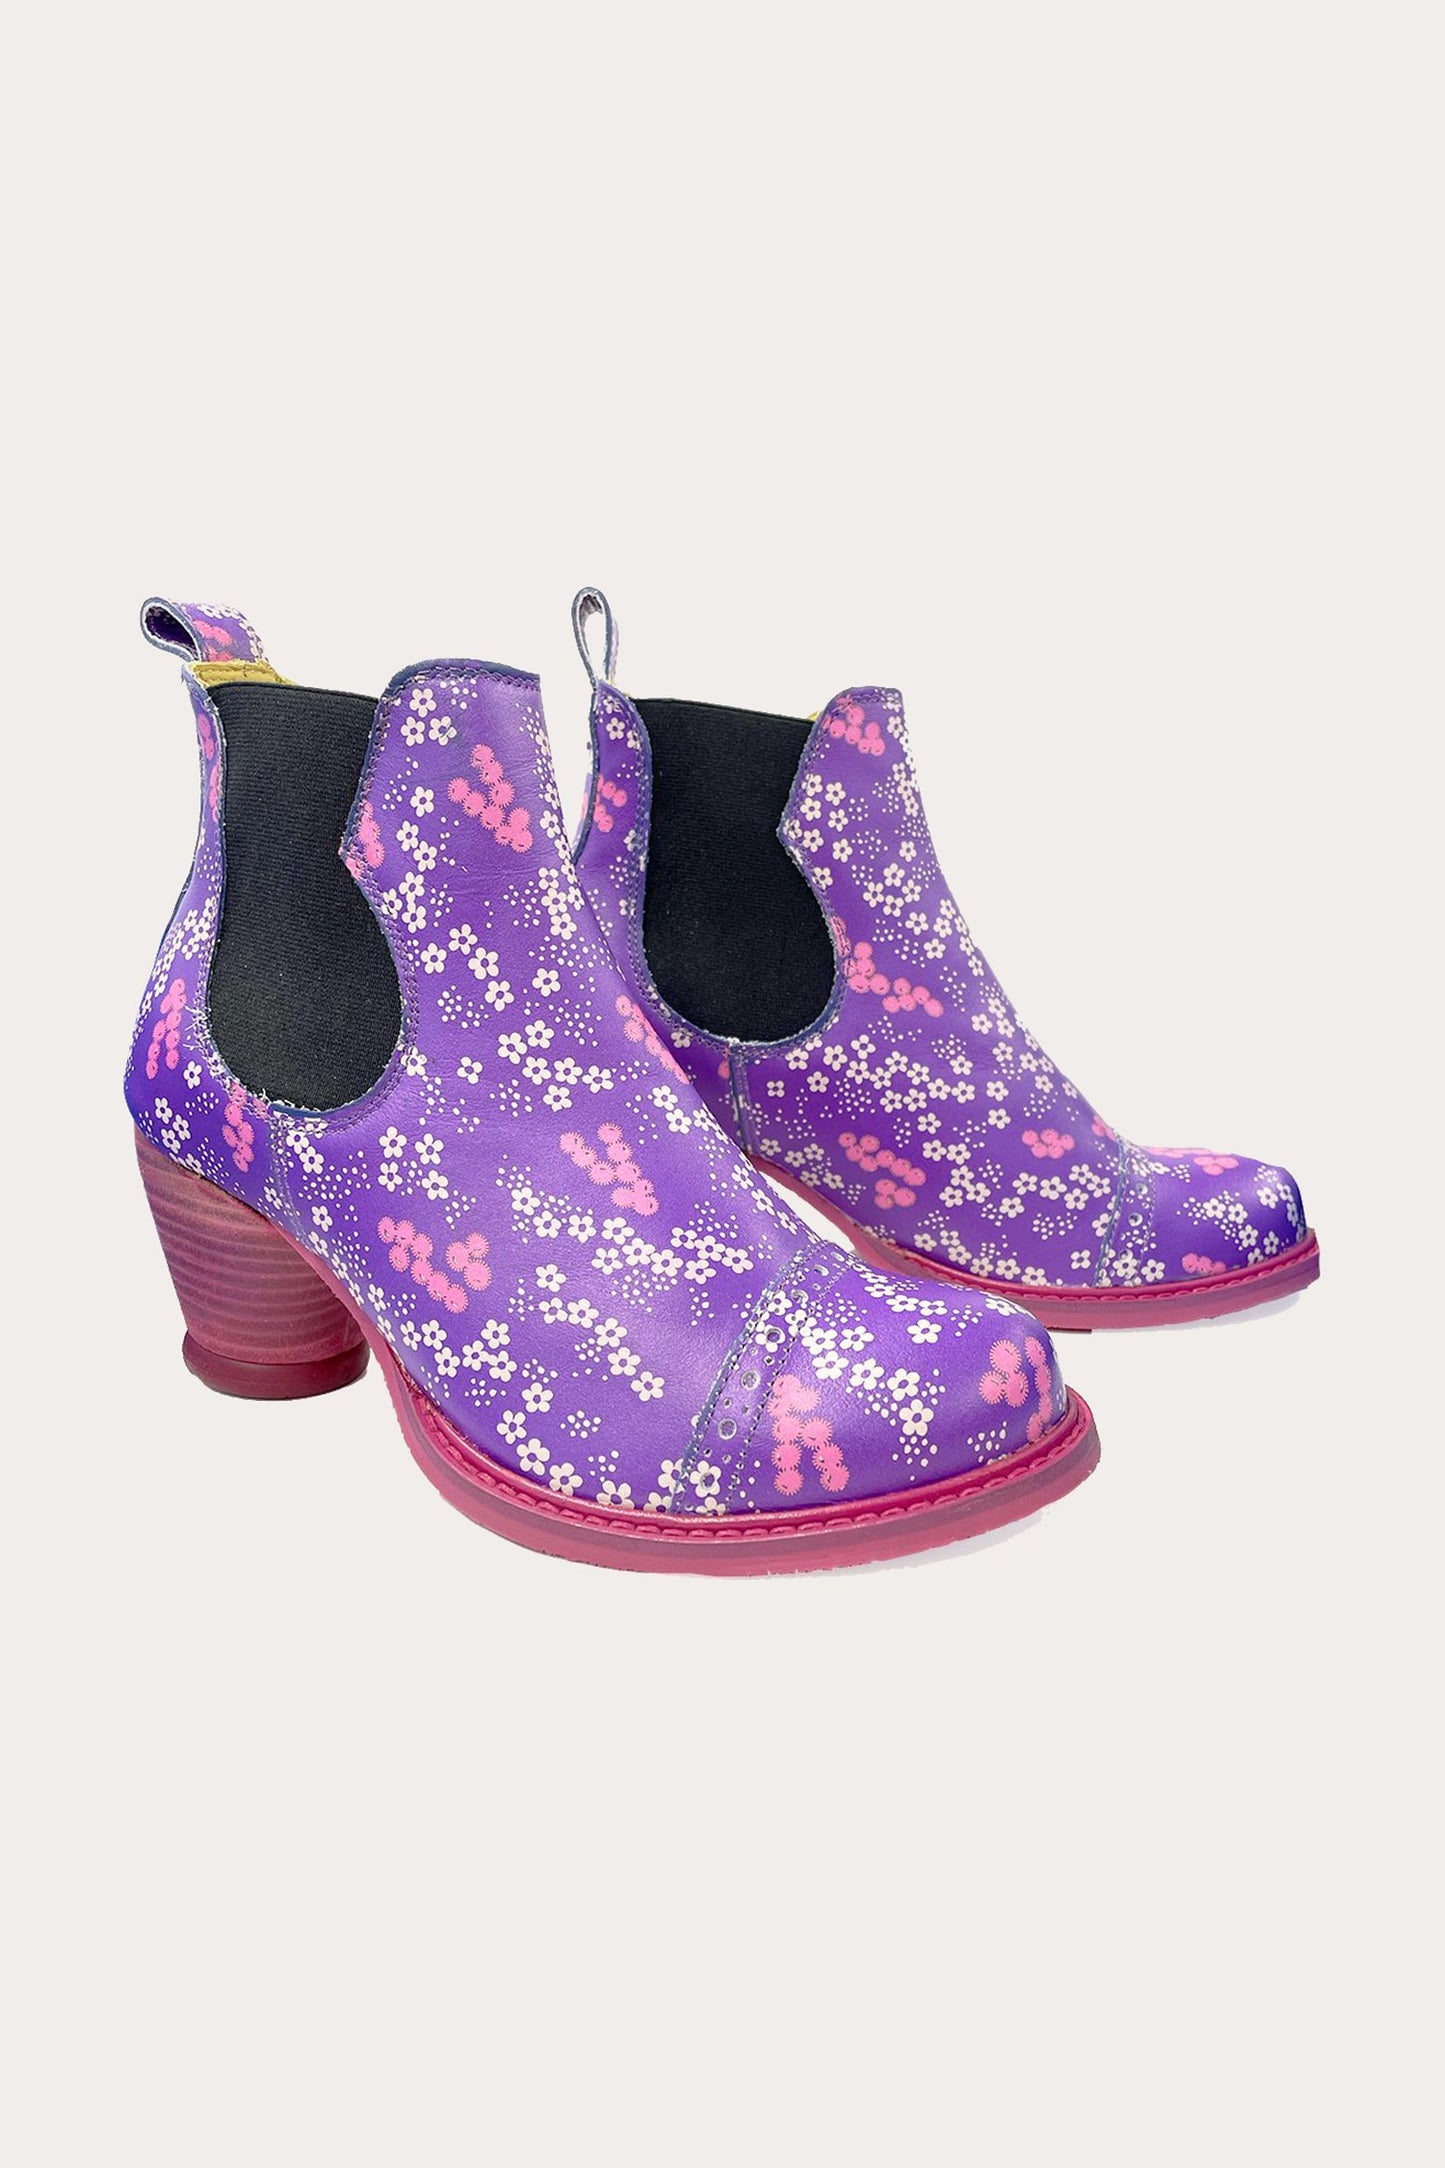 Ditsy Blooms Boot, high heel purple, pink/white floral design, black side elastic, ankles high